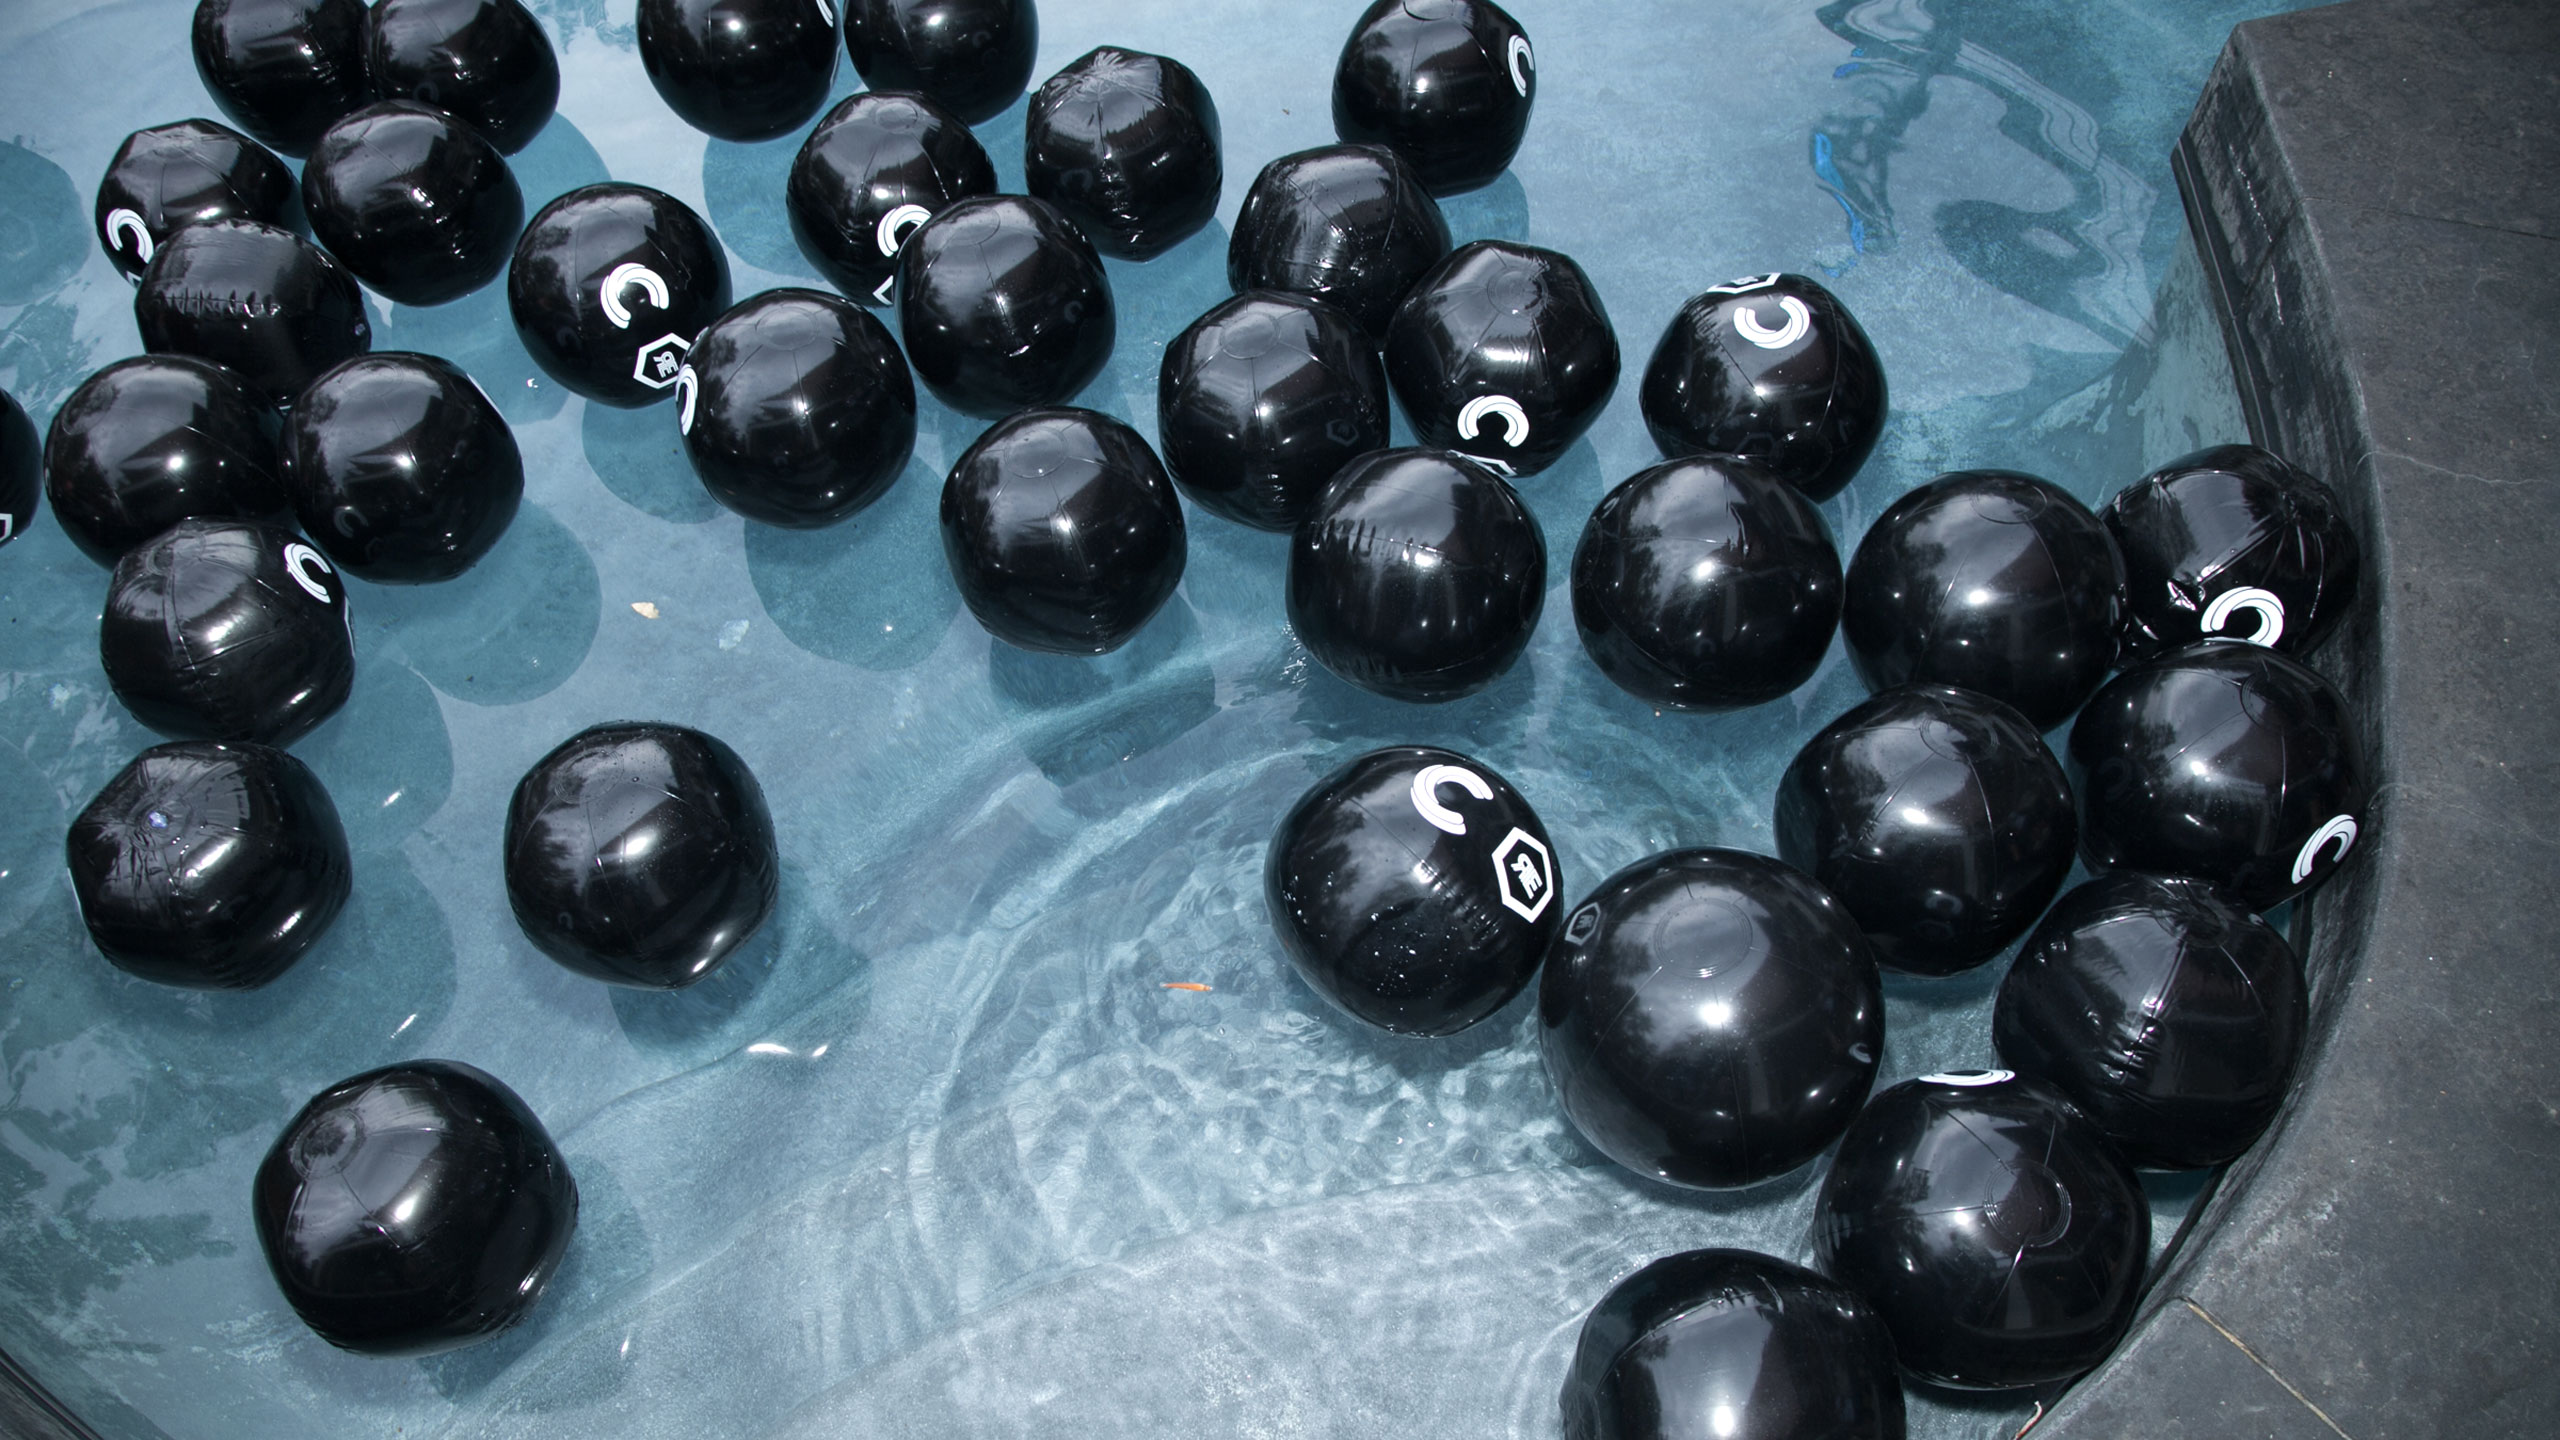 Conca Vodka pool with balls